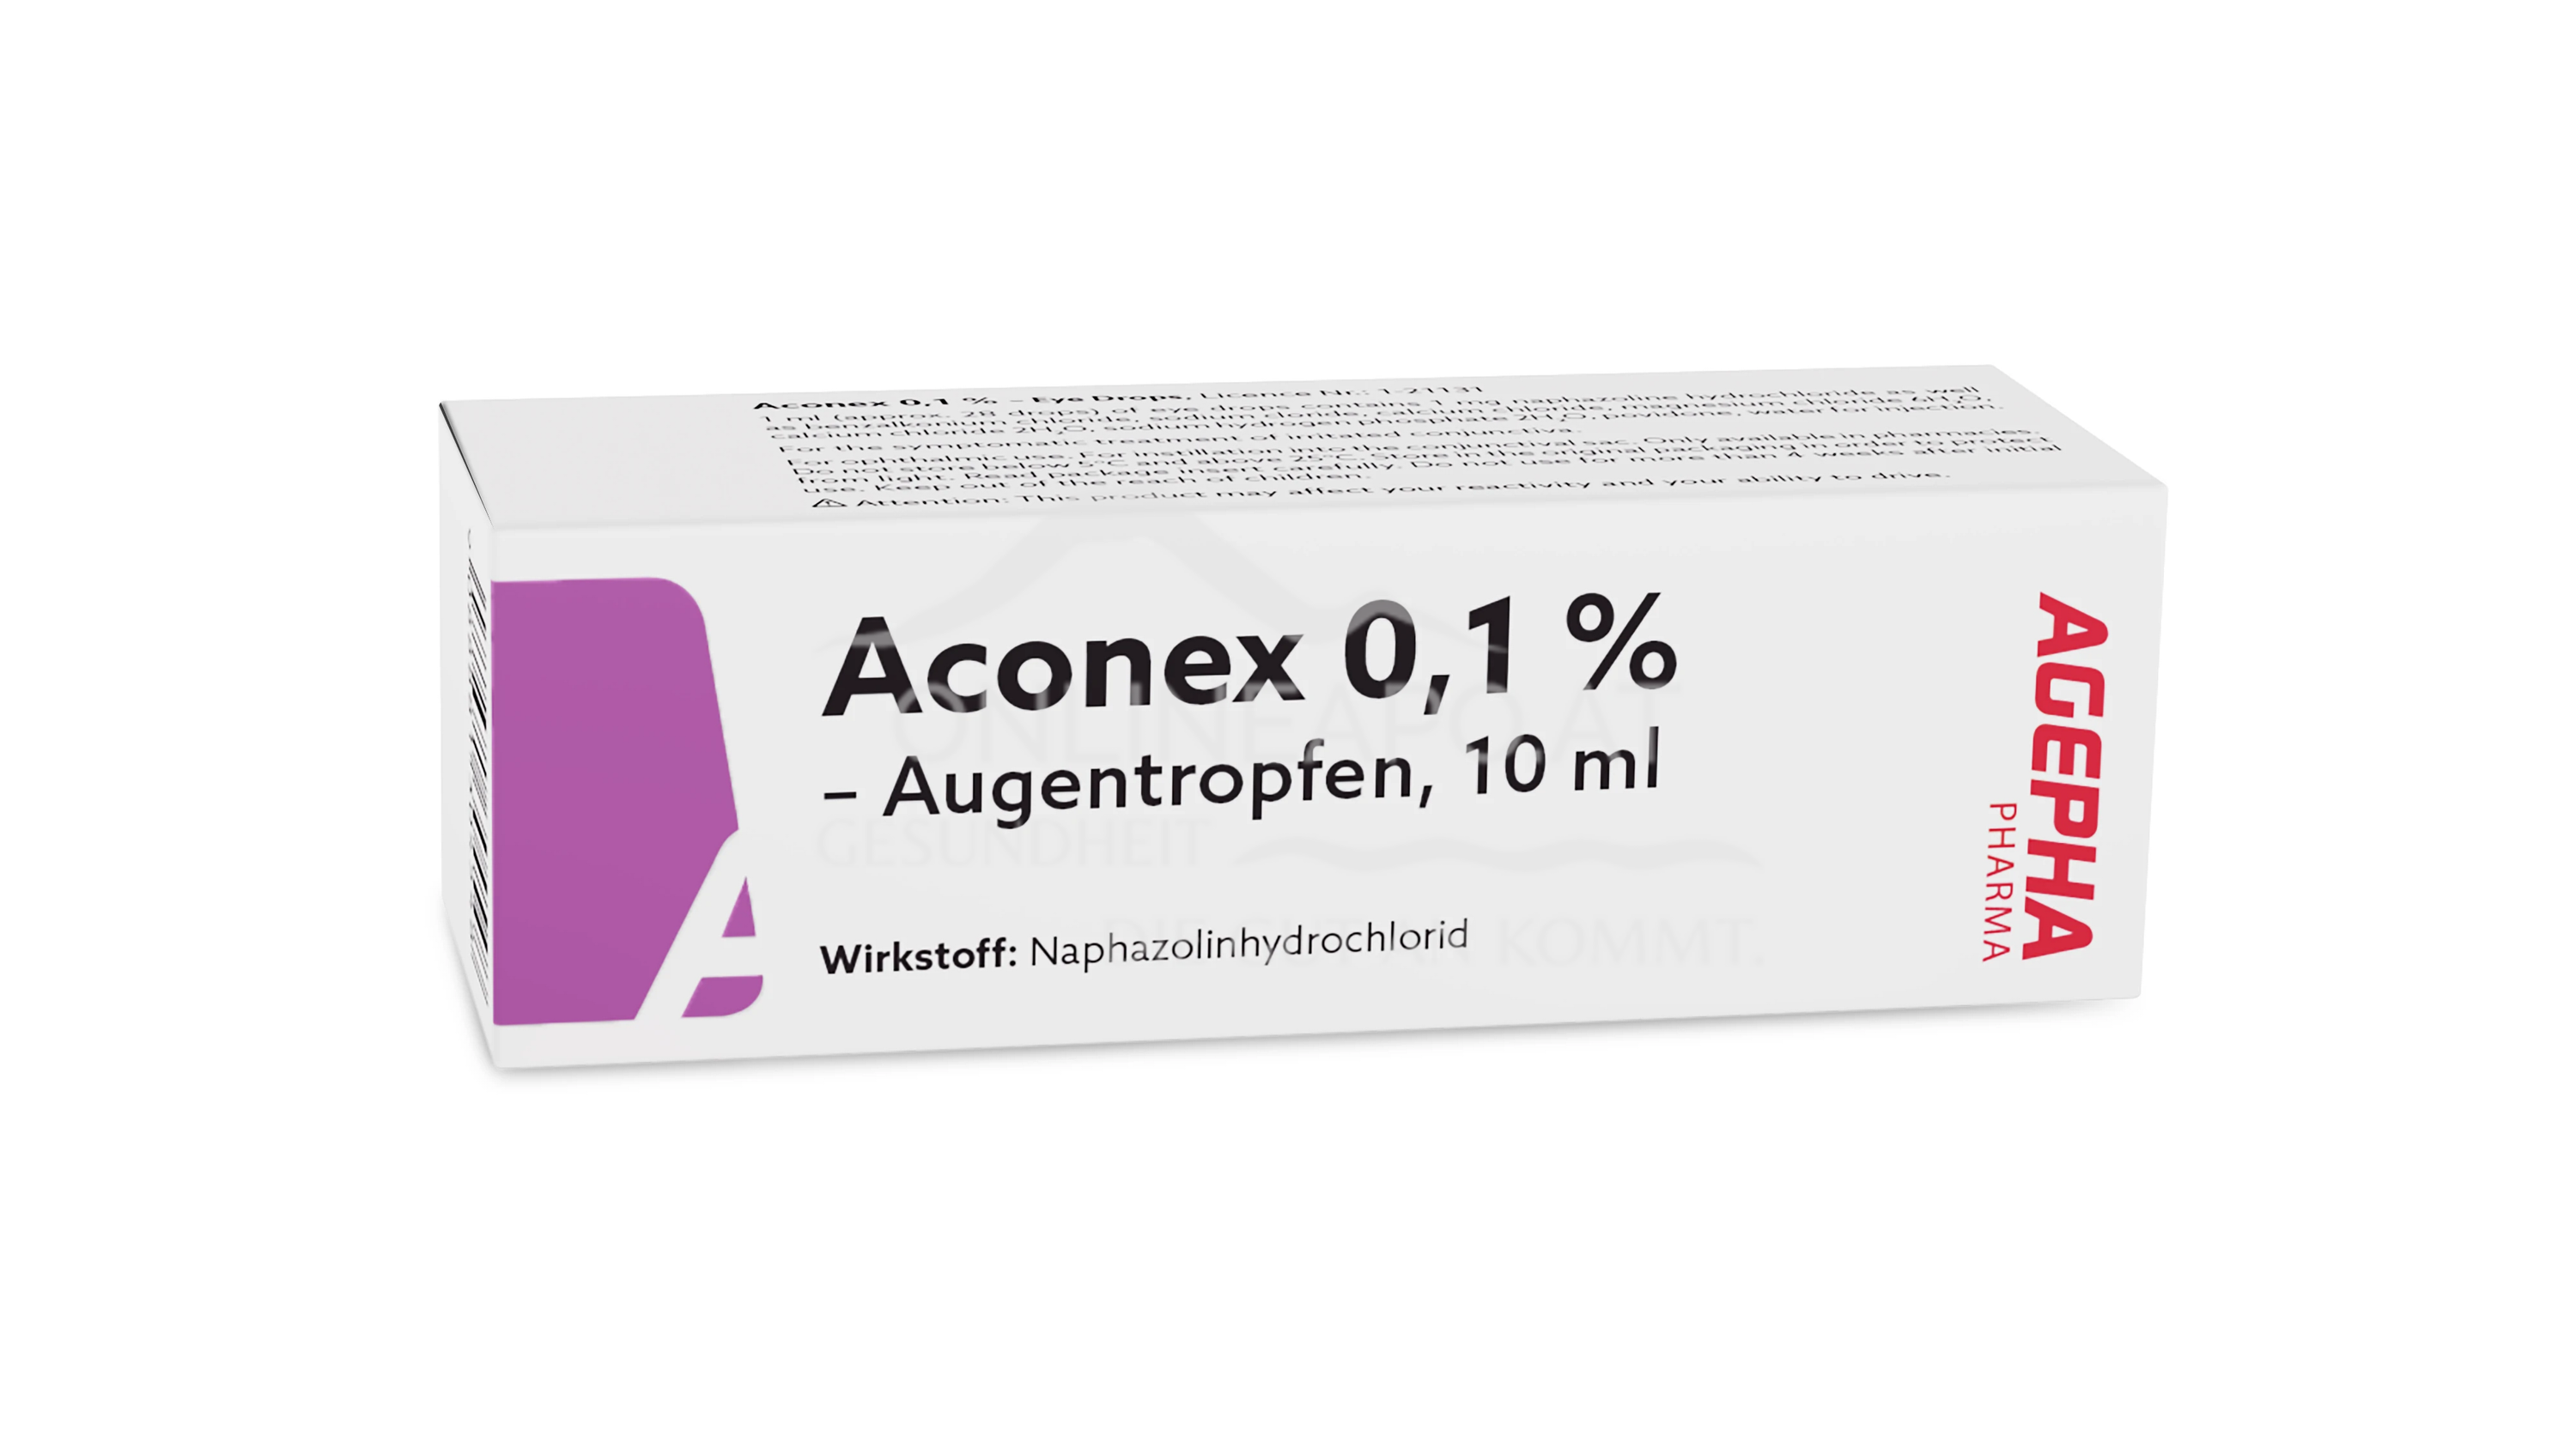 Aconex 0,1% Augentropfen